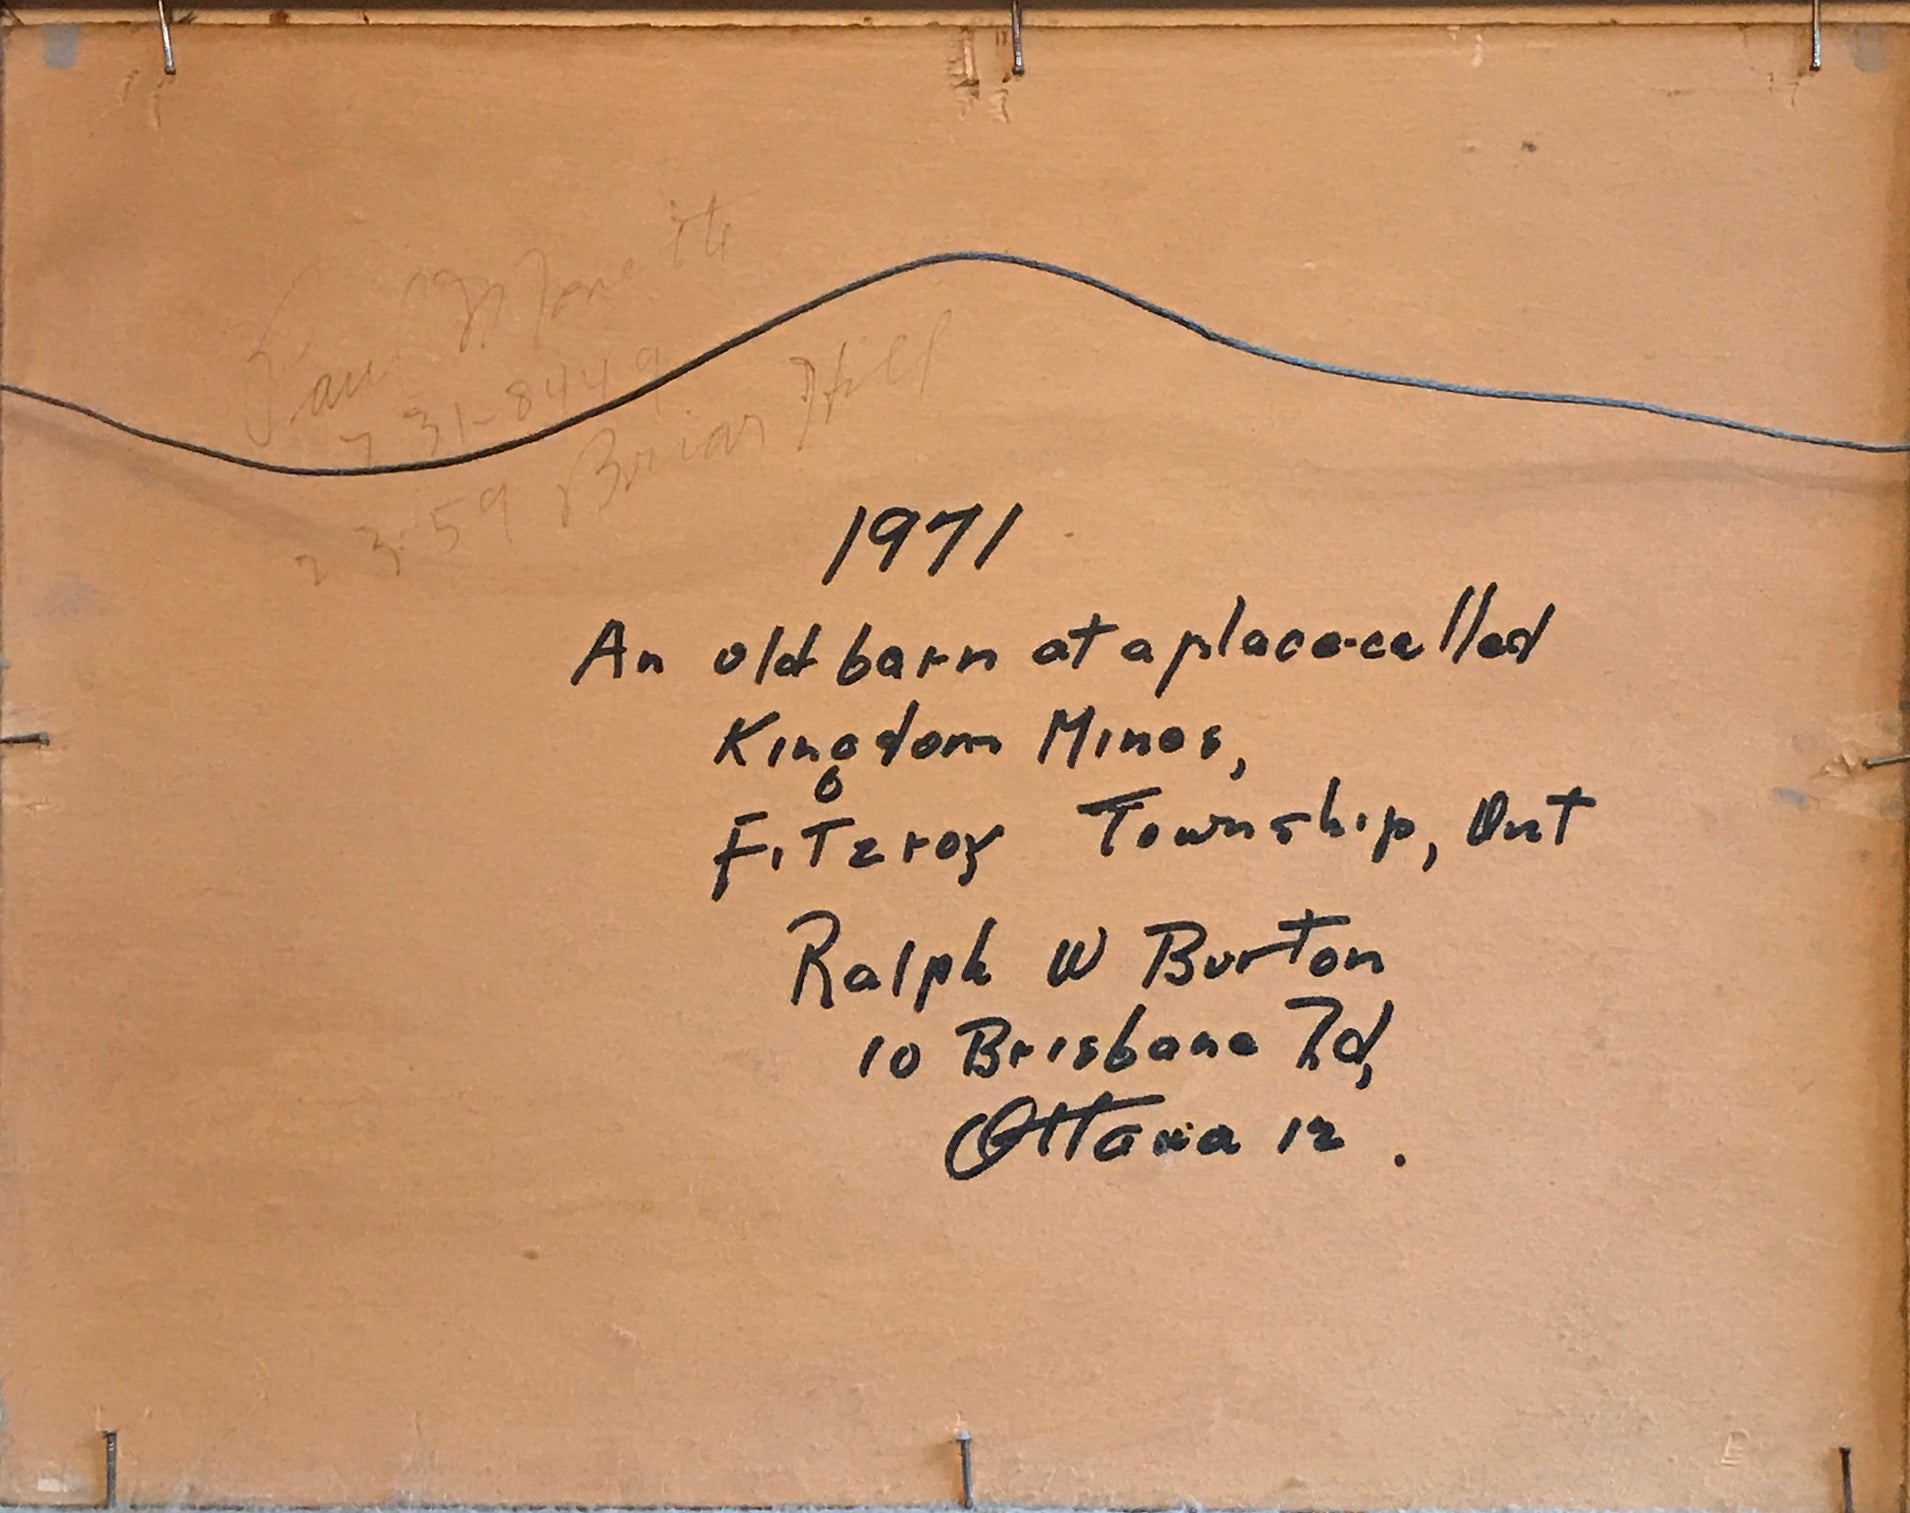 R. W. Burton "Old Barn, Kingdom Mines, Ont."